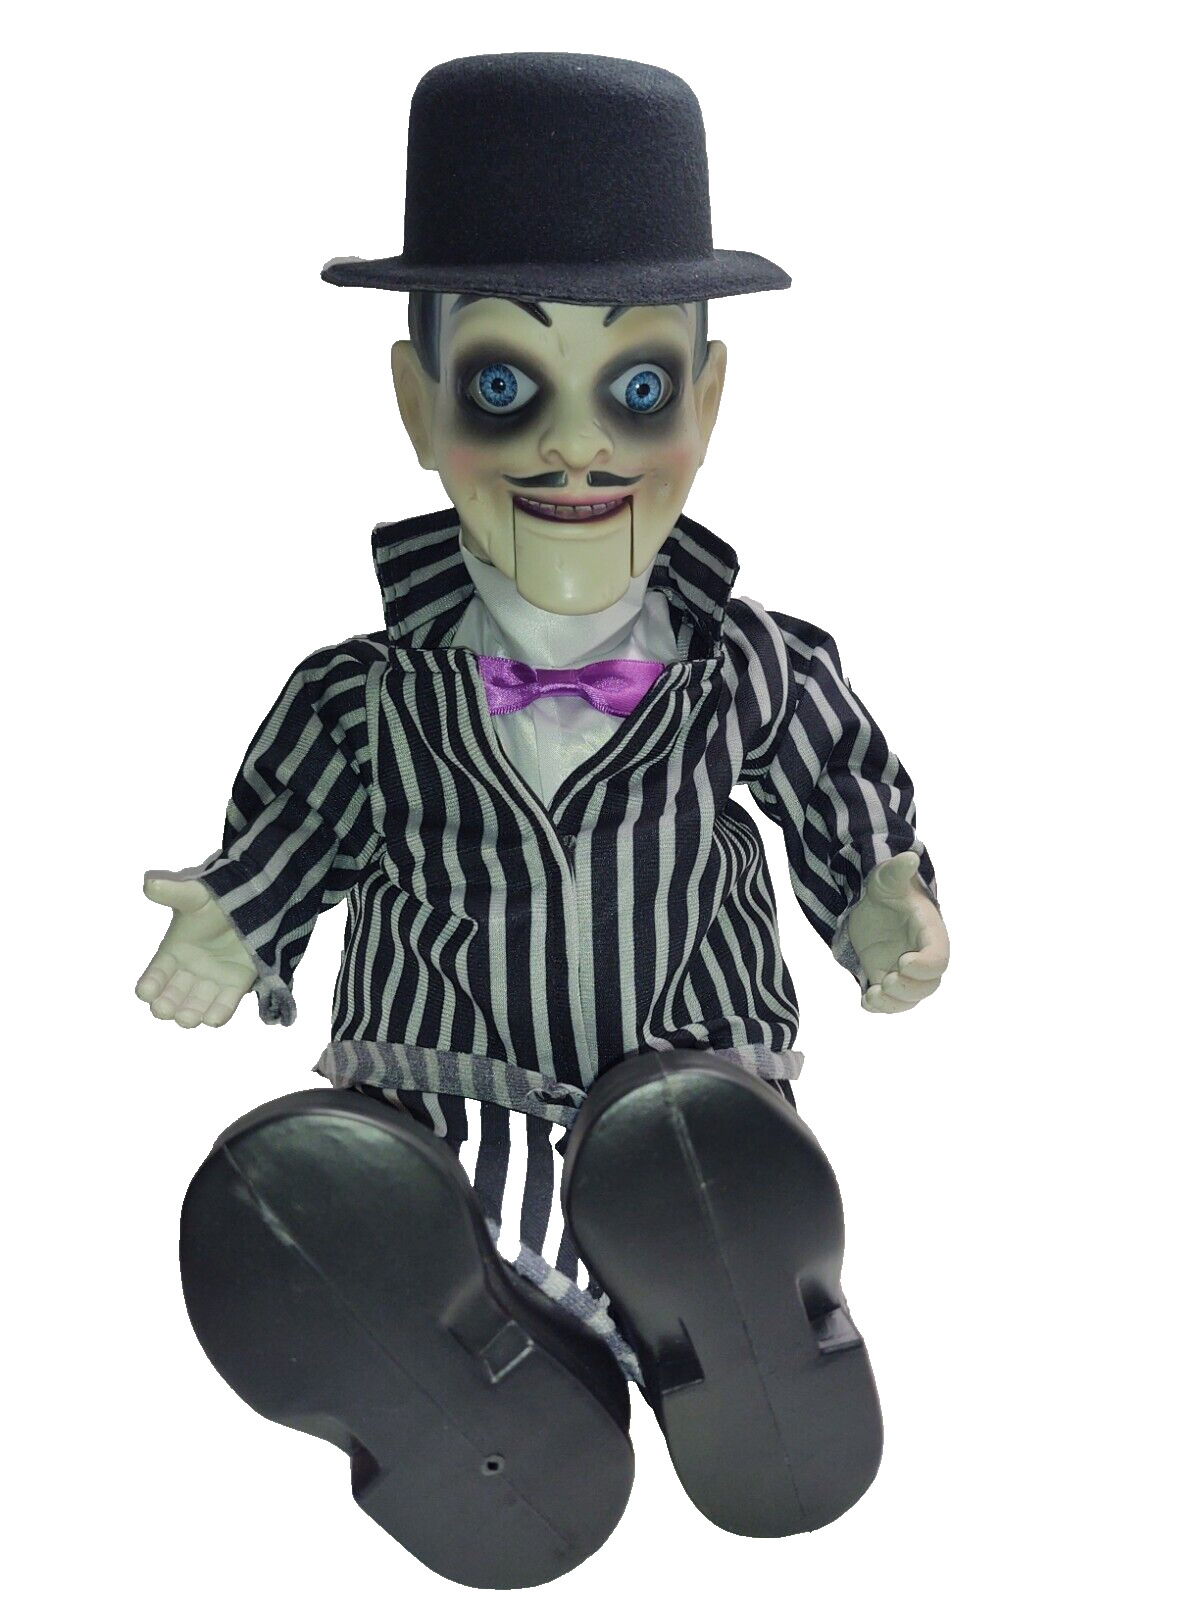 Animated Talking Haunted Puppet Doll Creepy Halloween Decor Dummy Ventriloquist